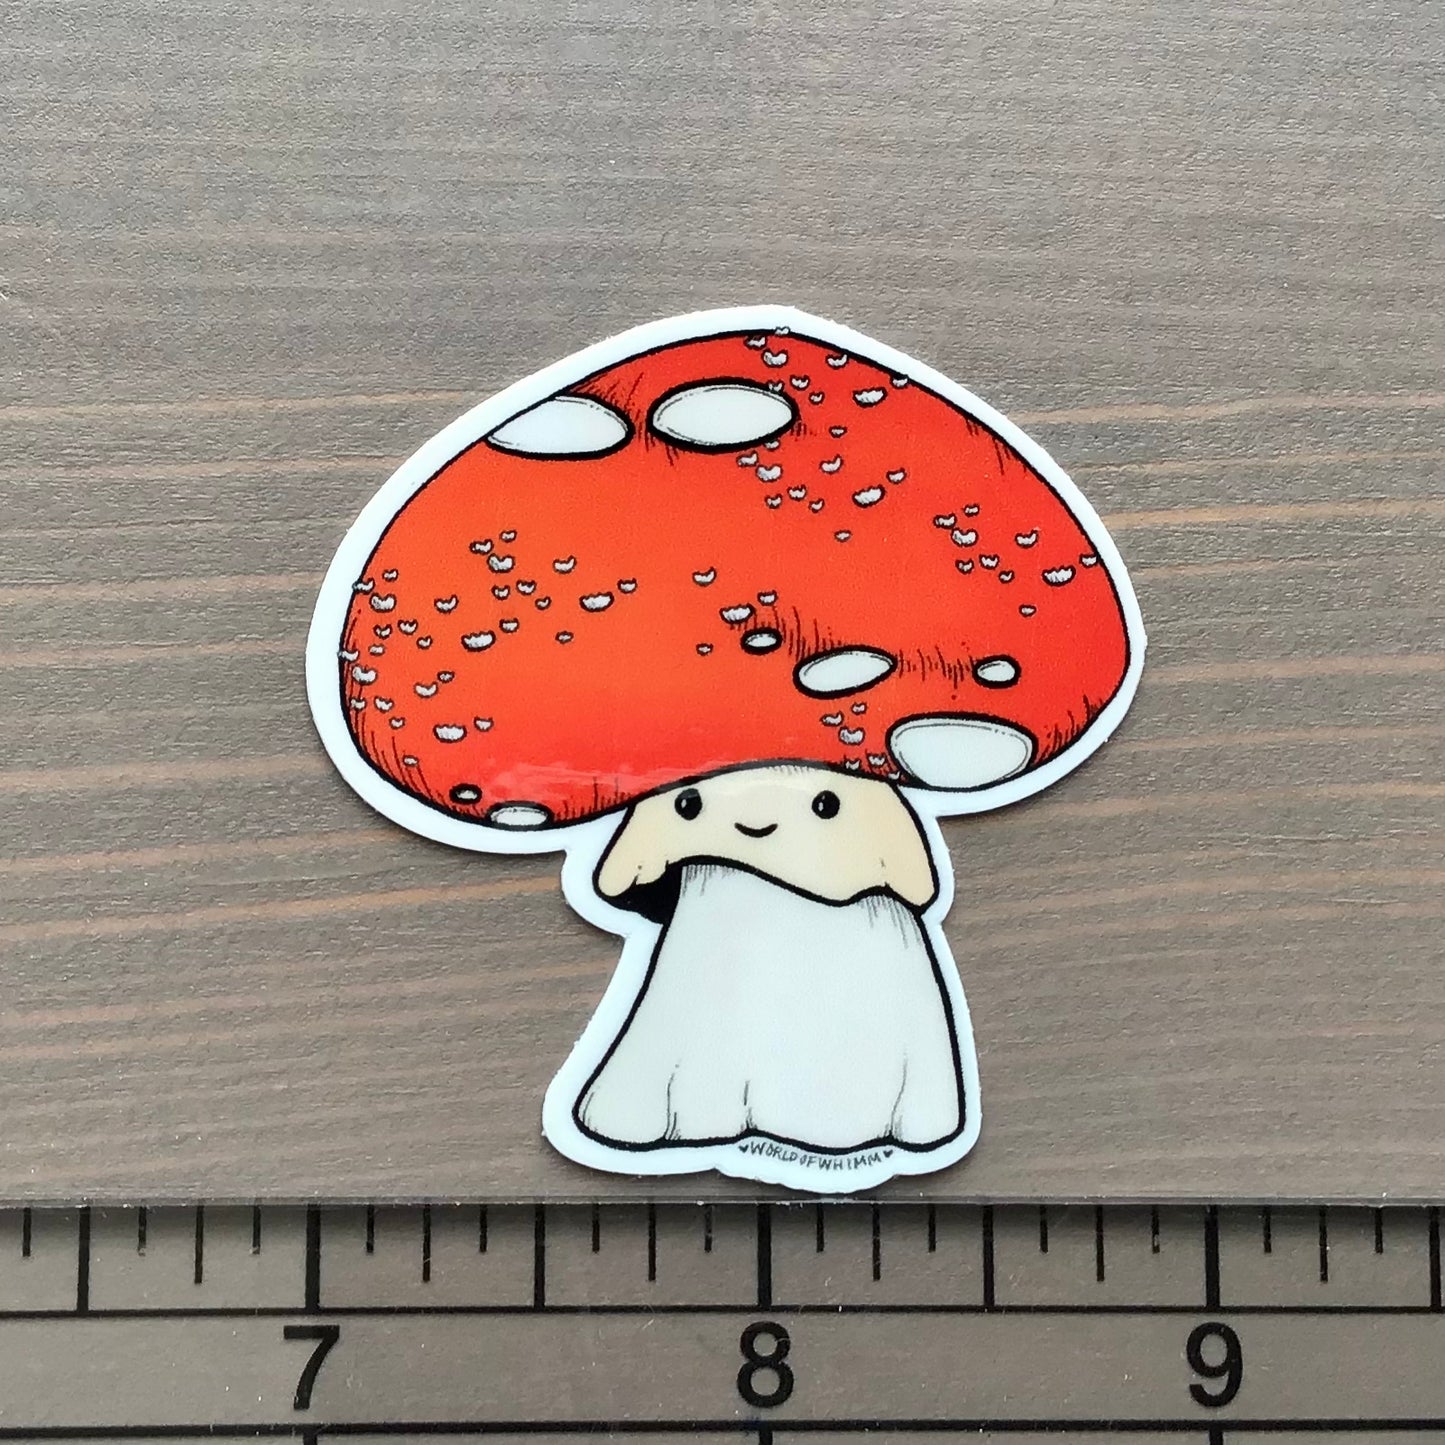 Vinyl Sticker - Little Red Mushroom